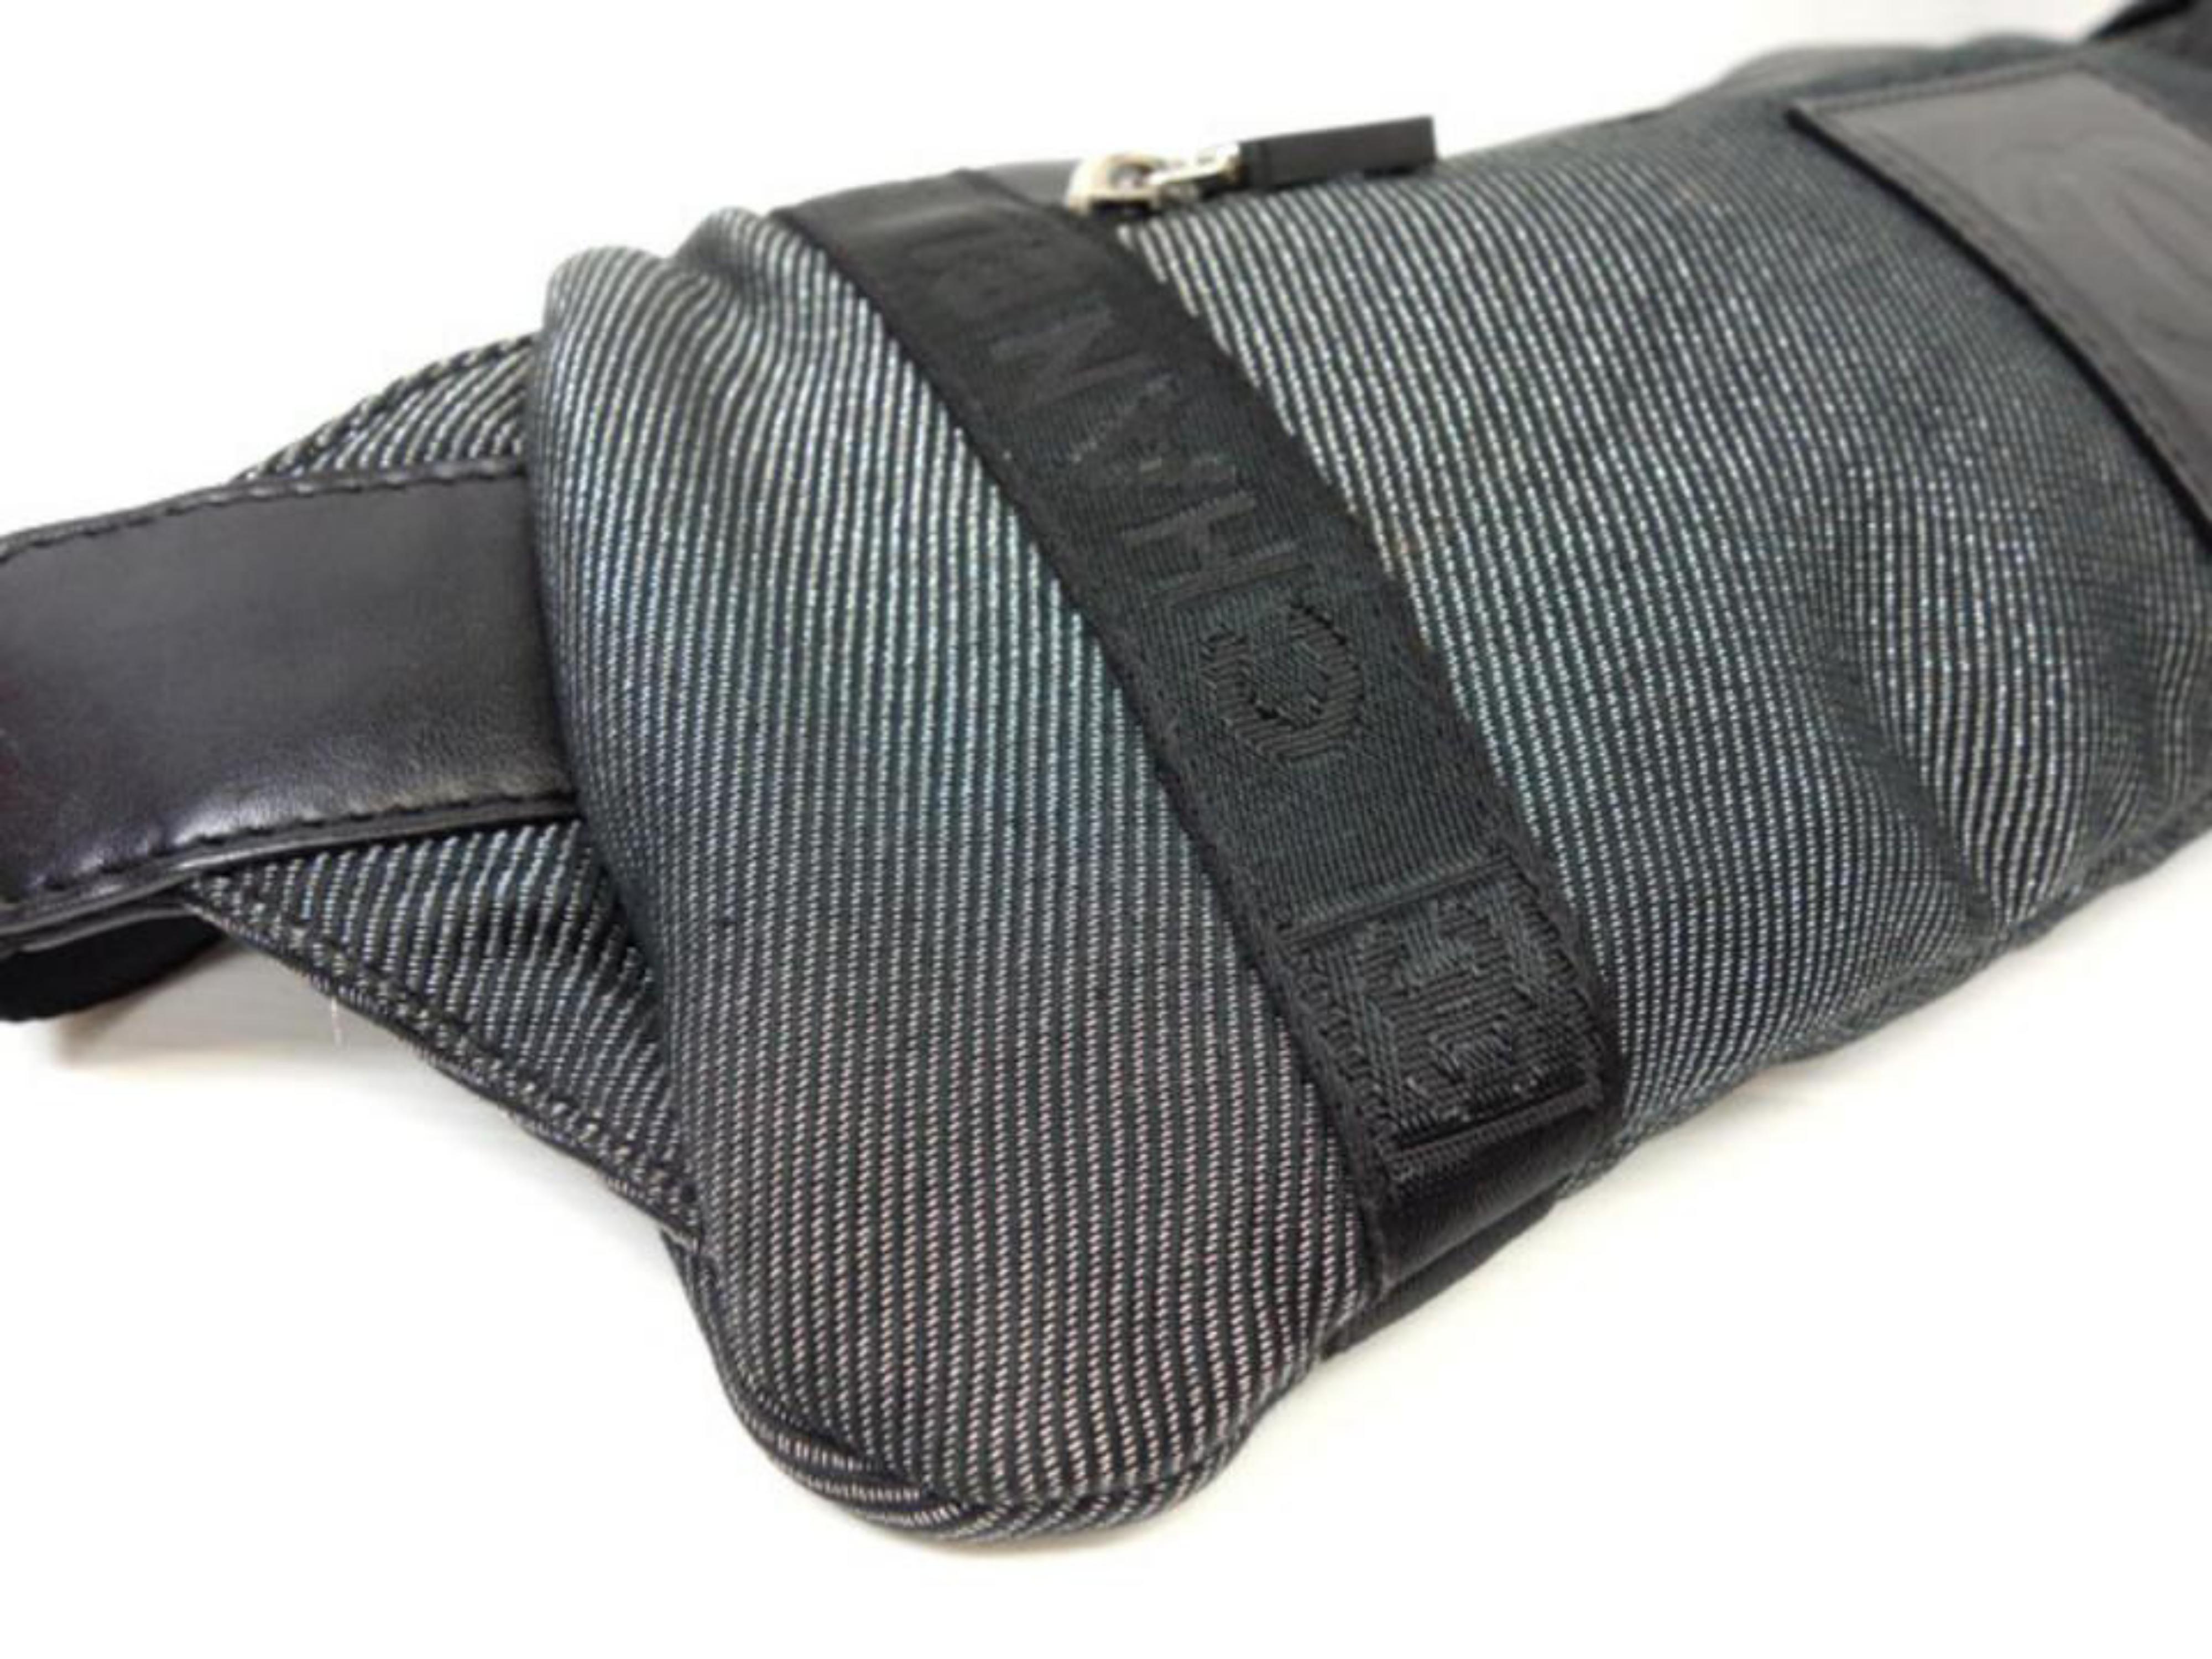 Chanel Waist Bag Cc Sports Fanny Pack 228165 Charcoal Coated Canvas Shoulder Bag For Sale 4